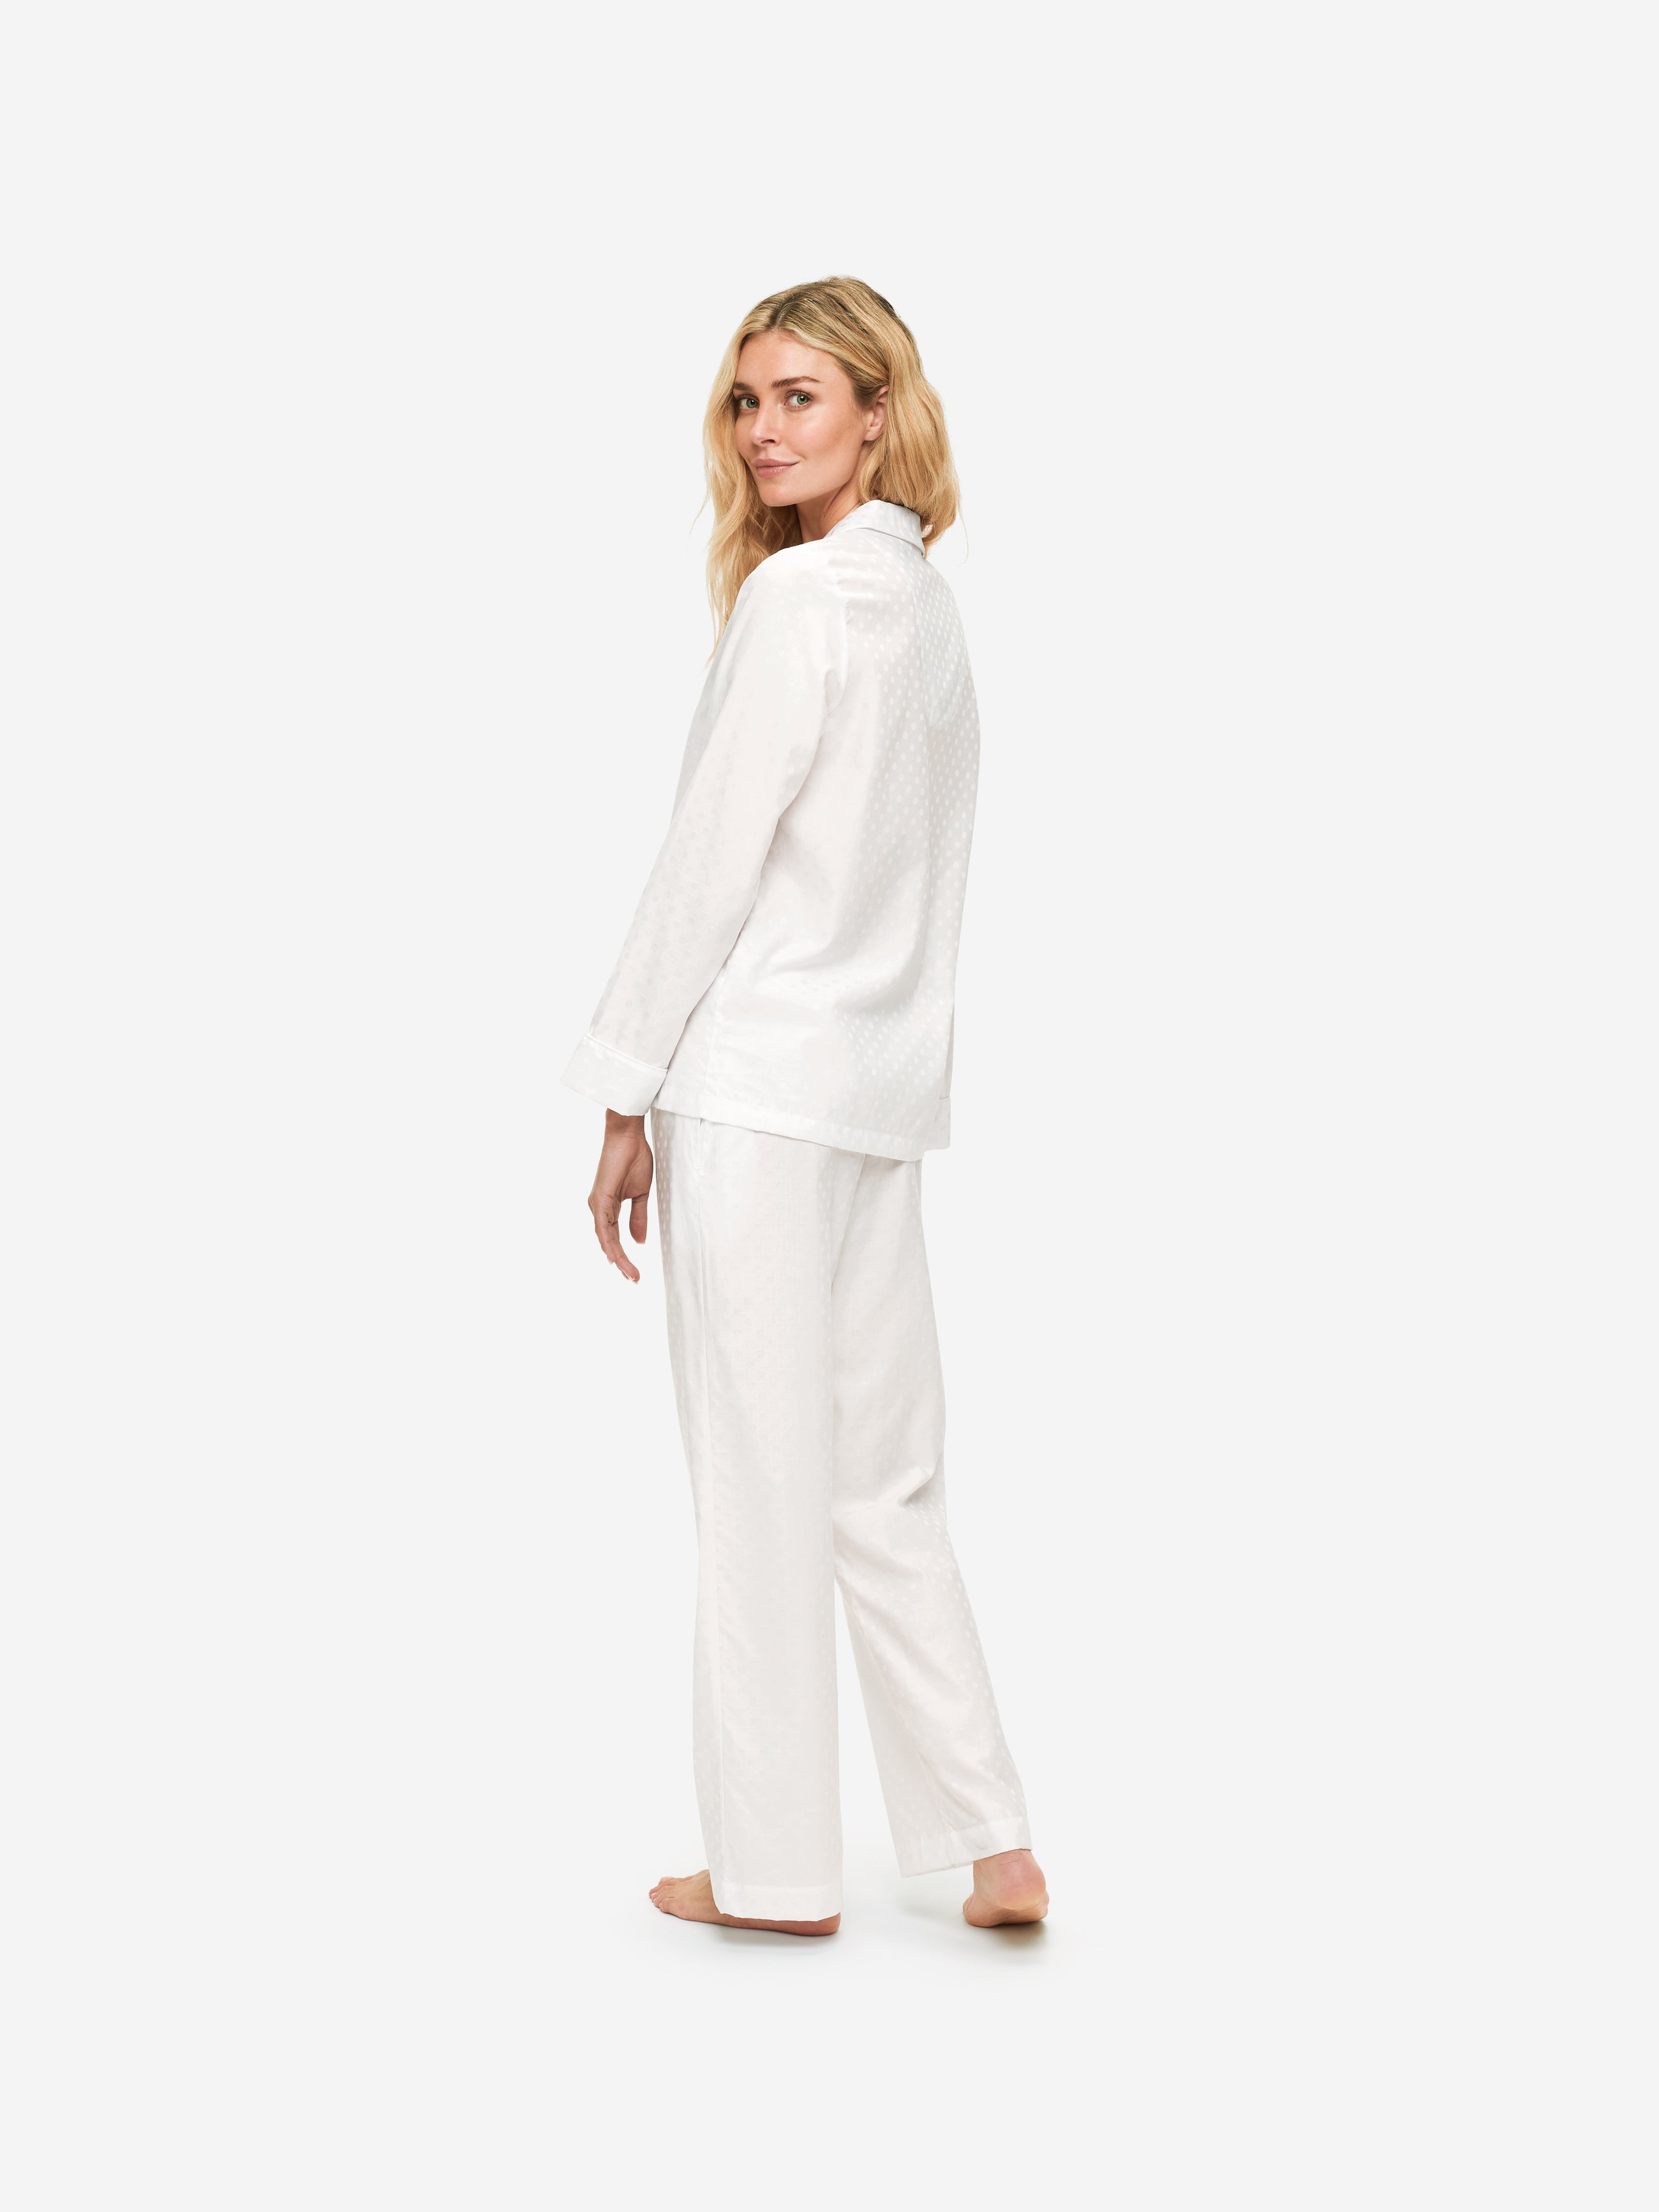 Women's Pyjamas Kate 7 Cotton Jacquard White